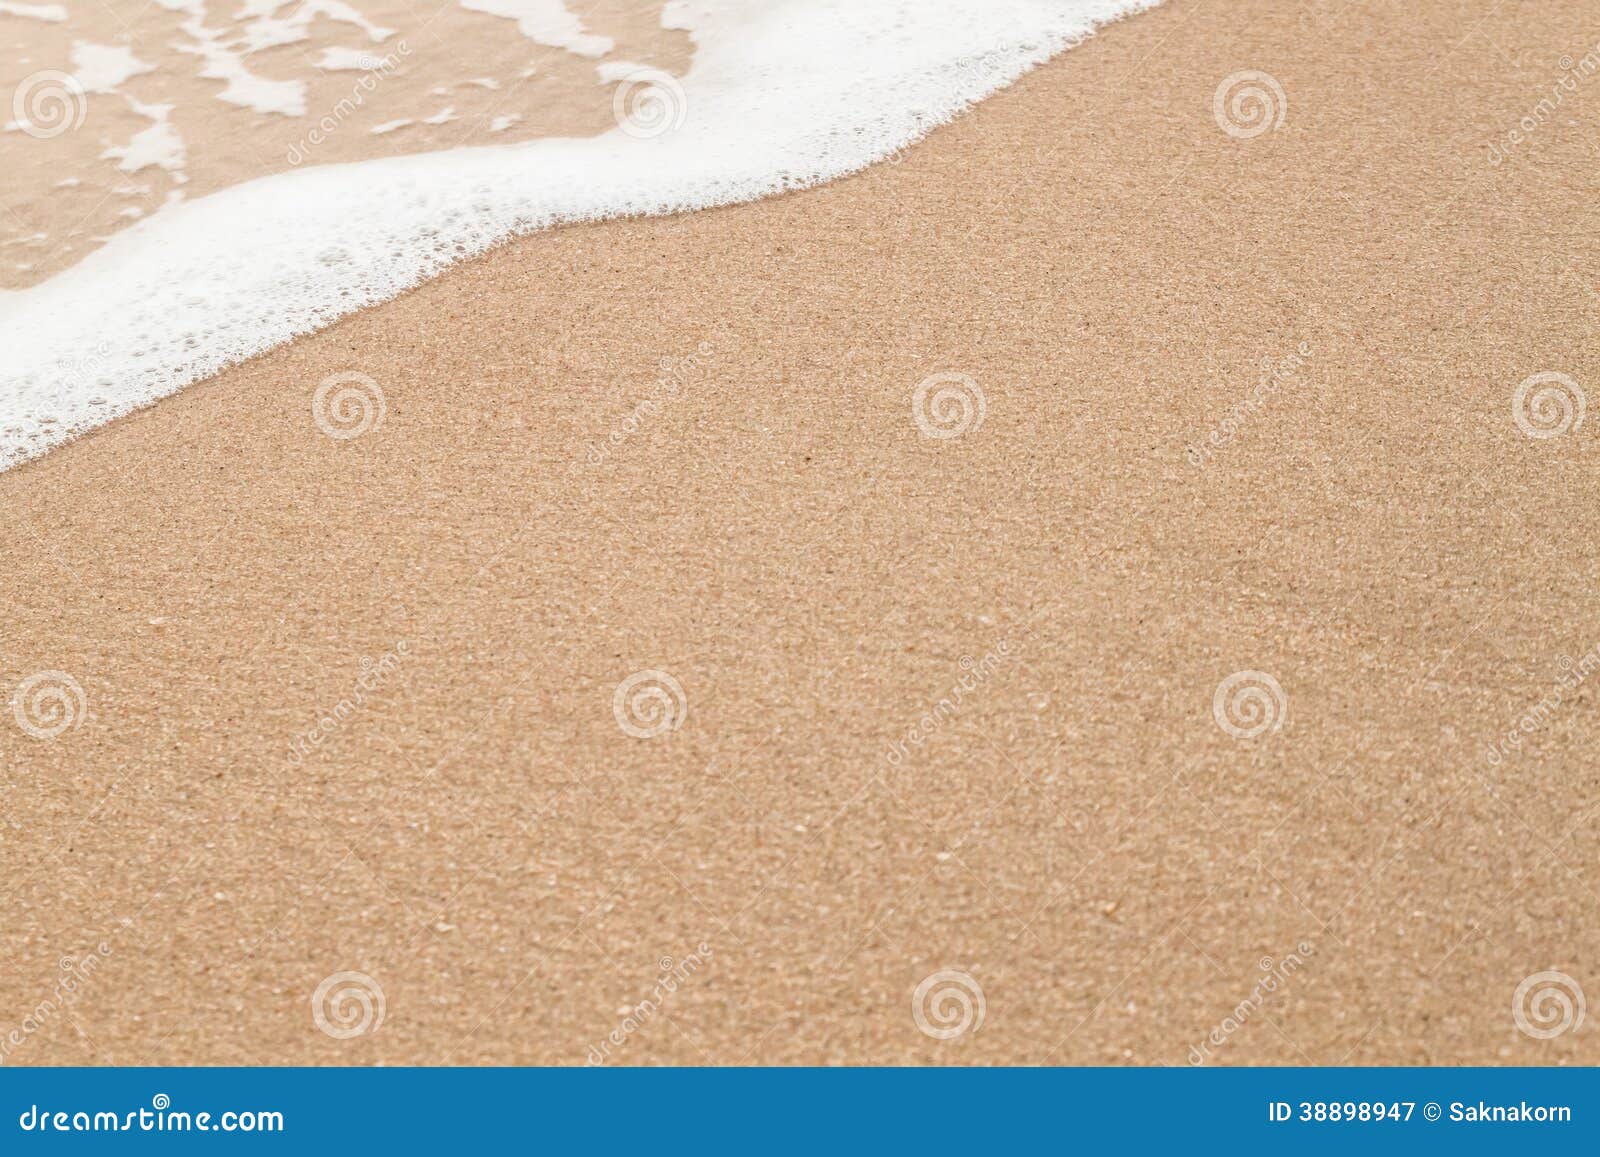 wave of sea on sandy beach